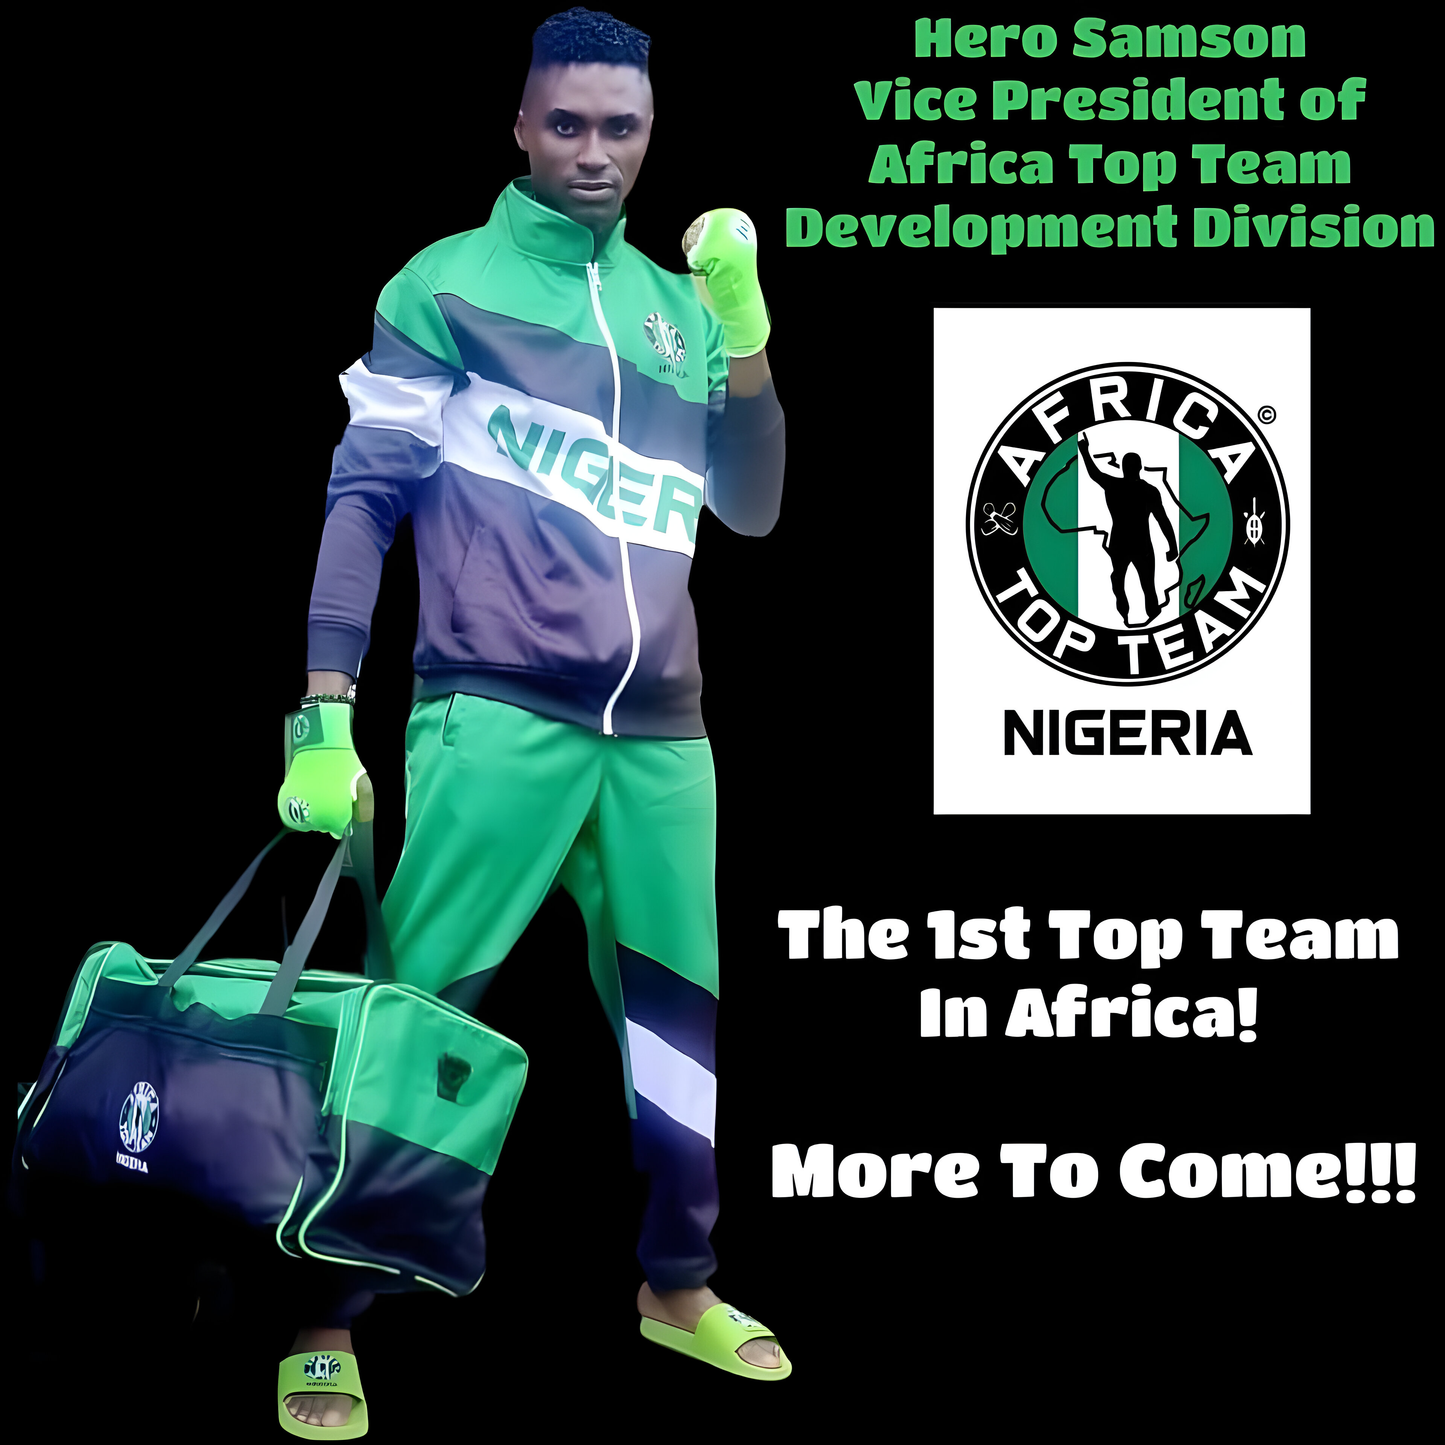 Africa Top Team Nigeria White Zip Hoodie with pocket